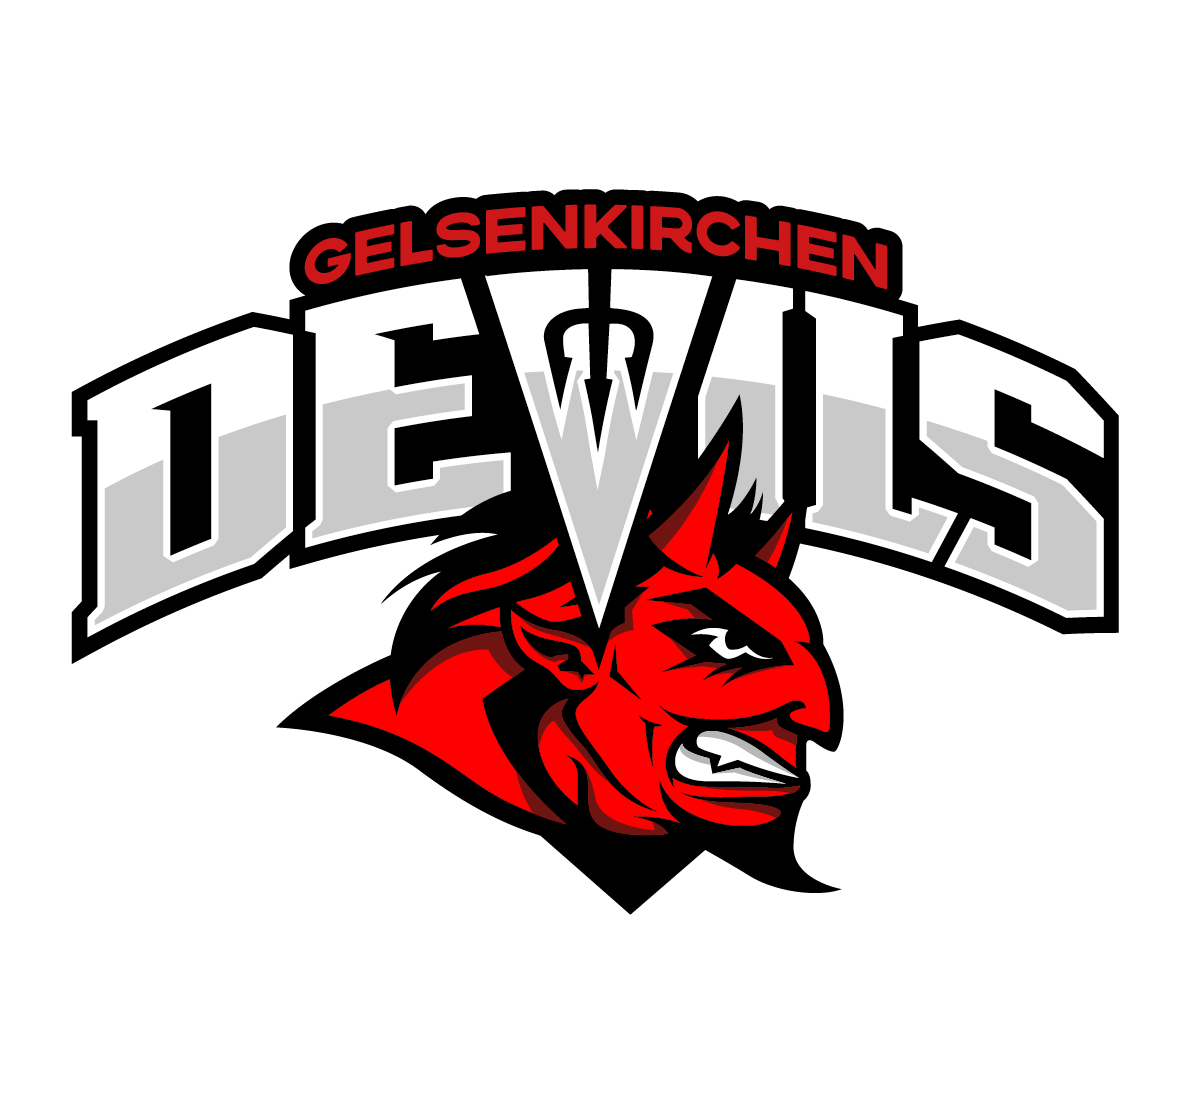 Gelsenkirchen Devils